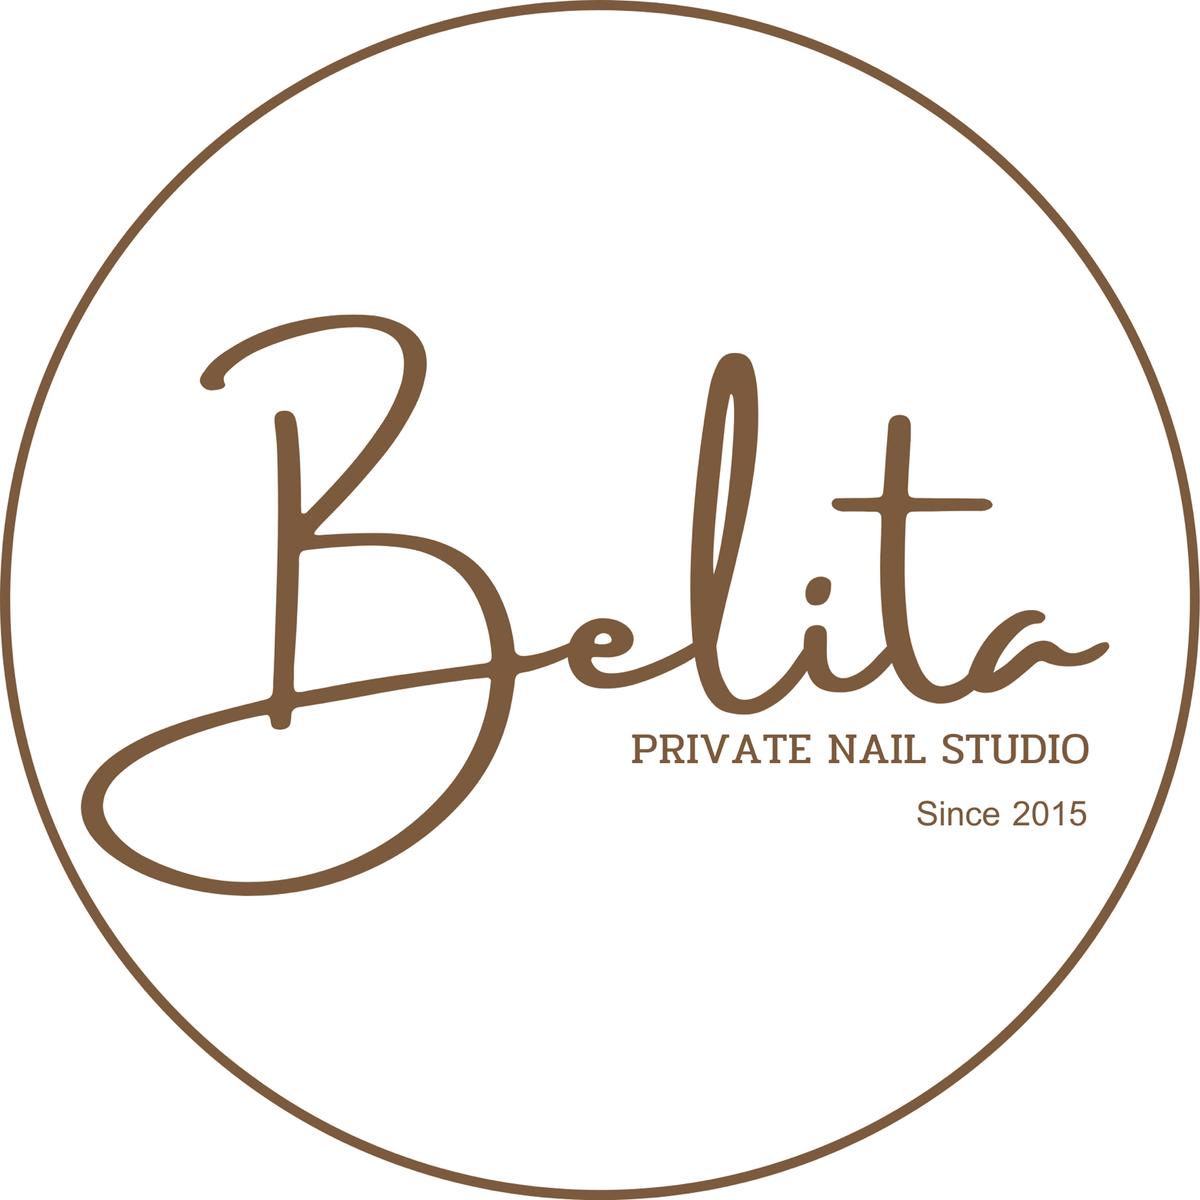 Belita Private